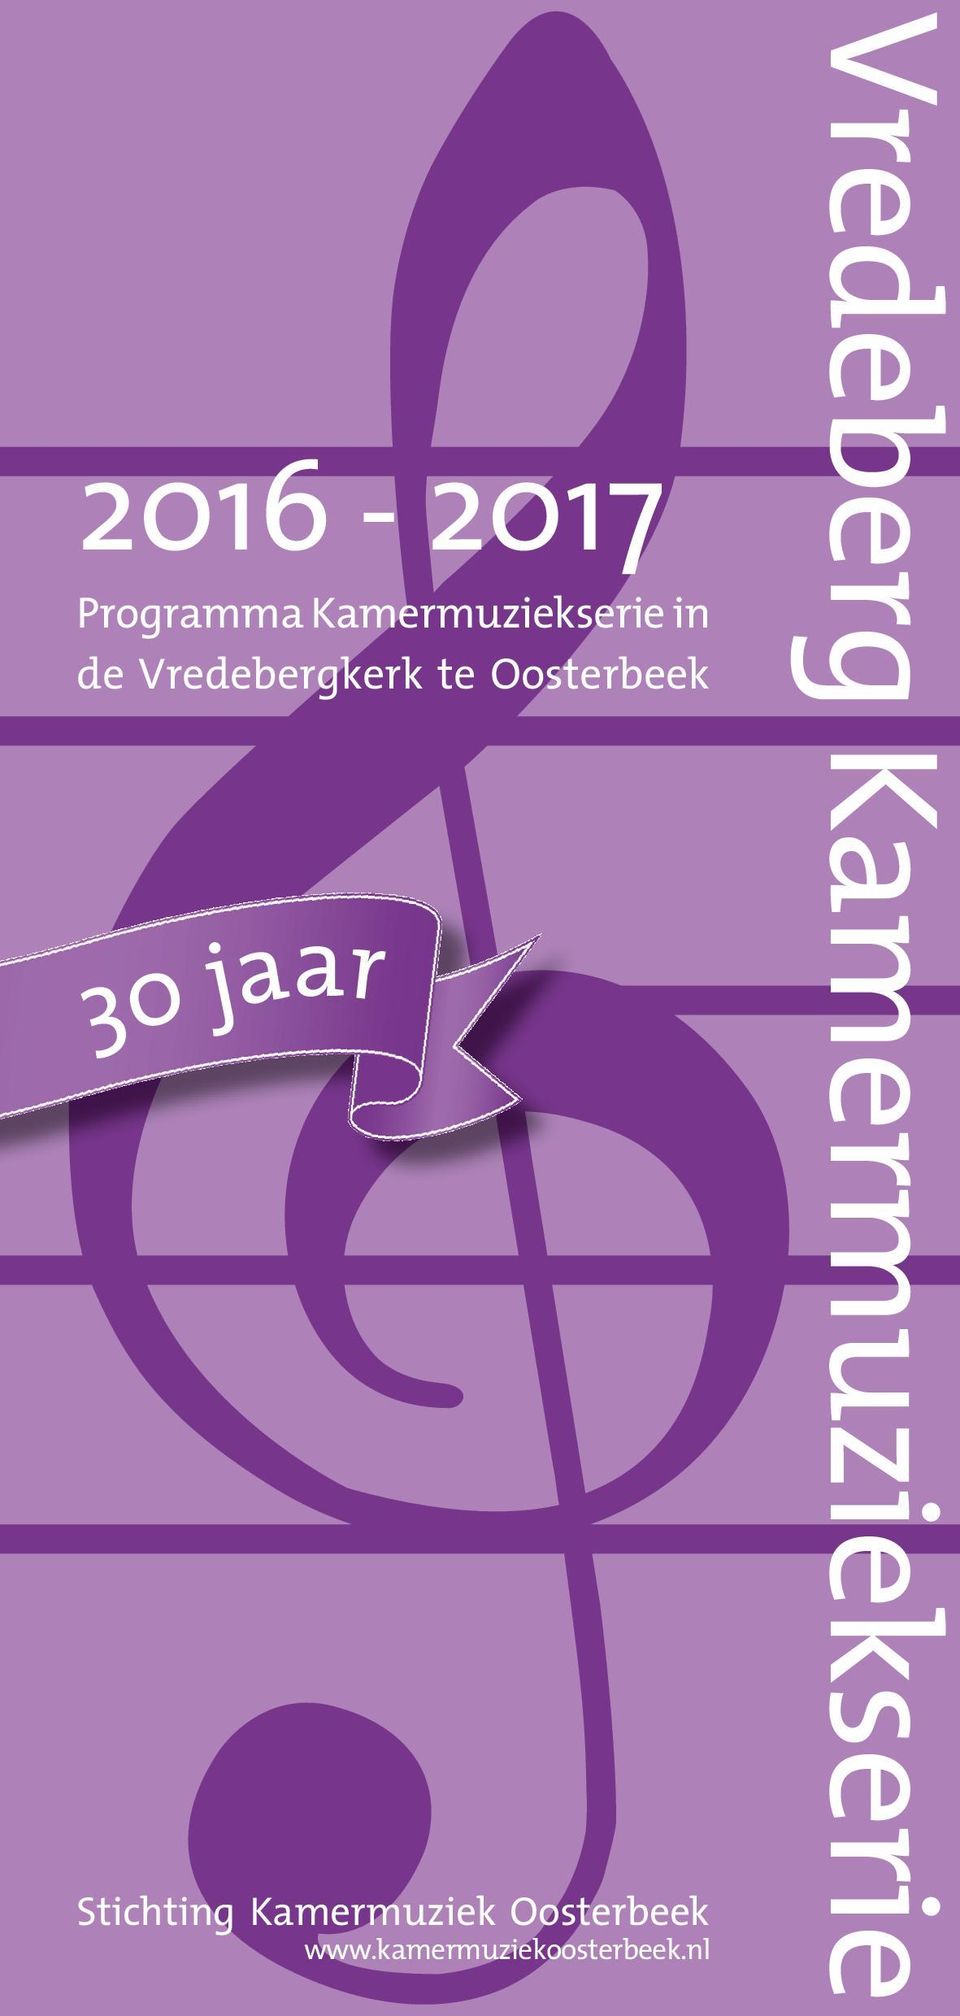 Stichting Kamermuziek Oosterbeek www.